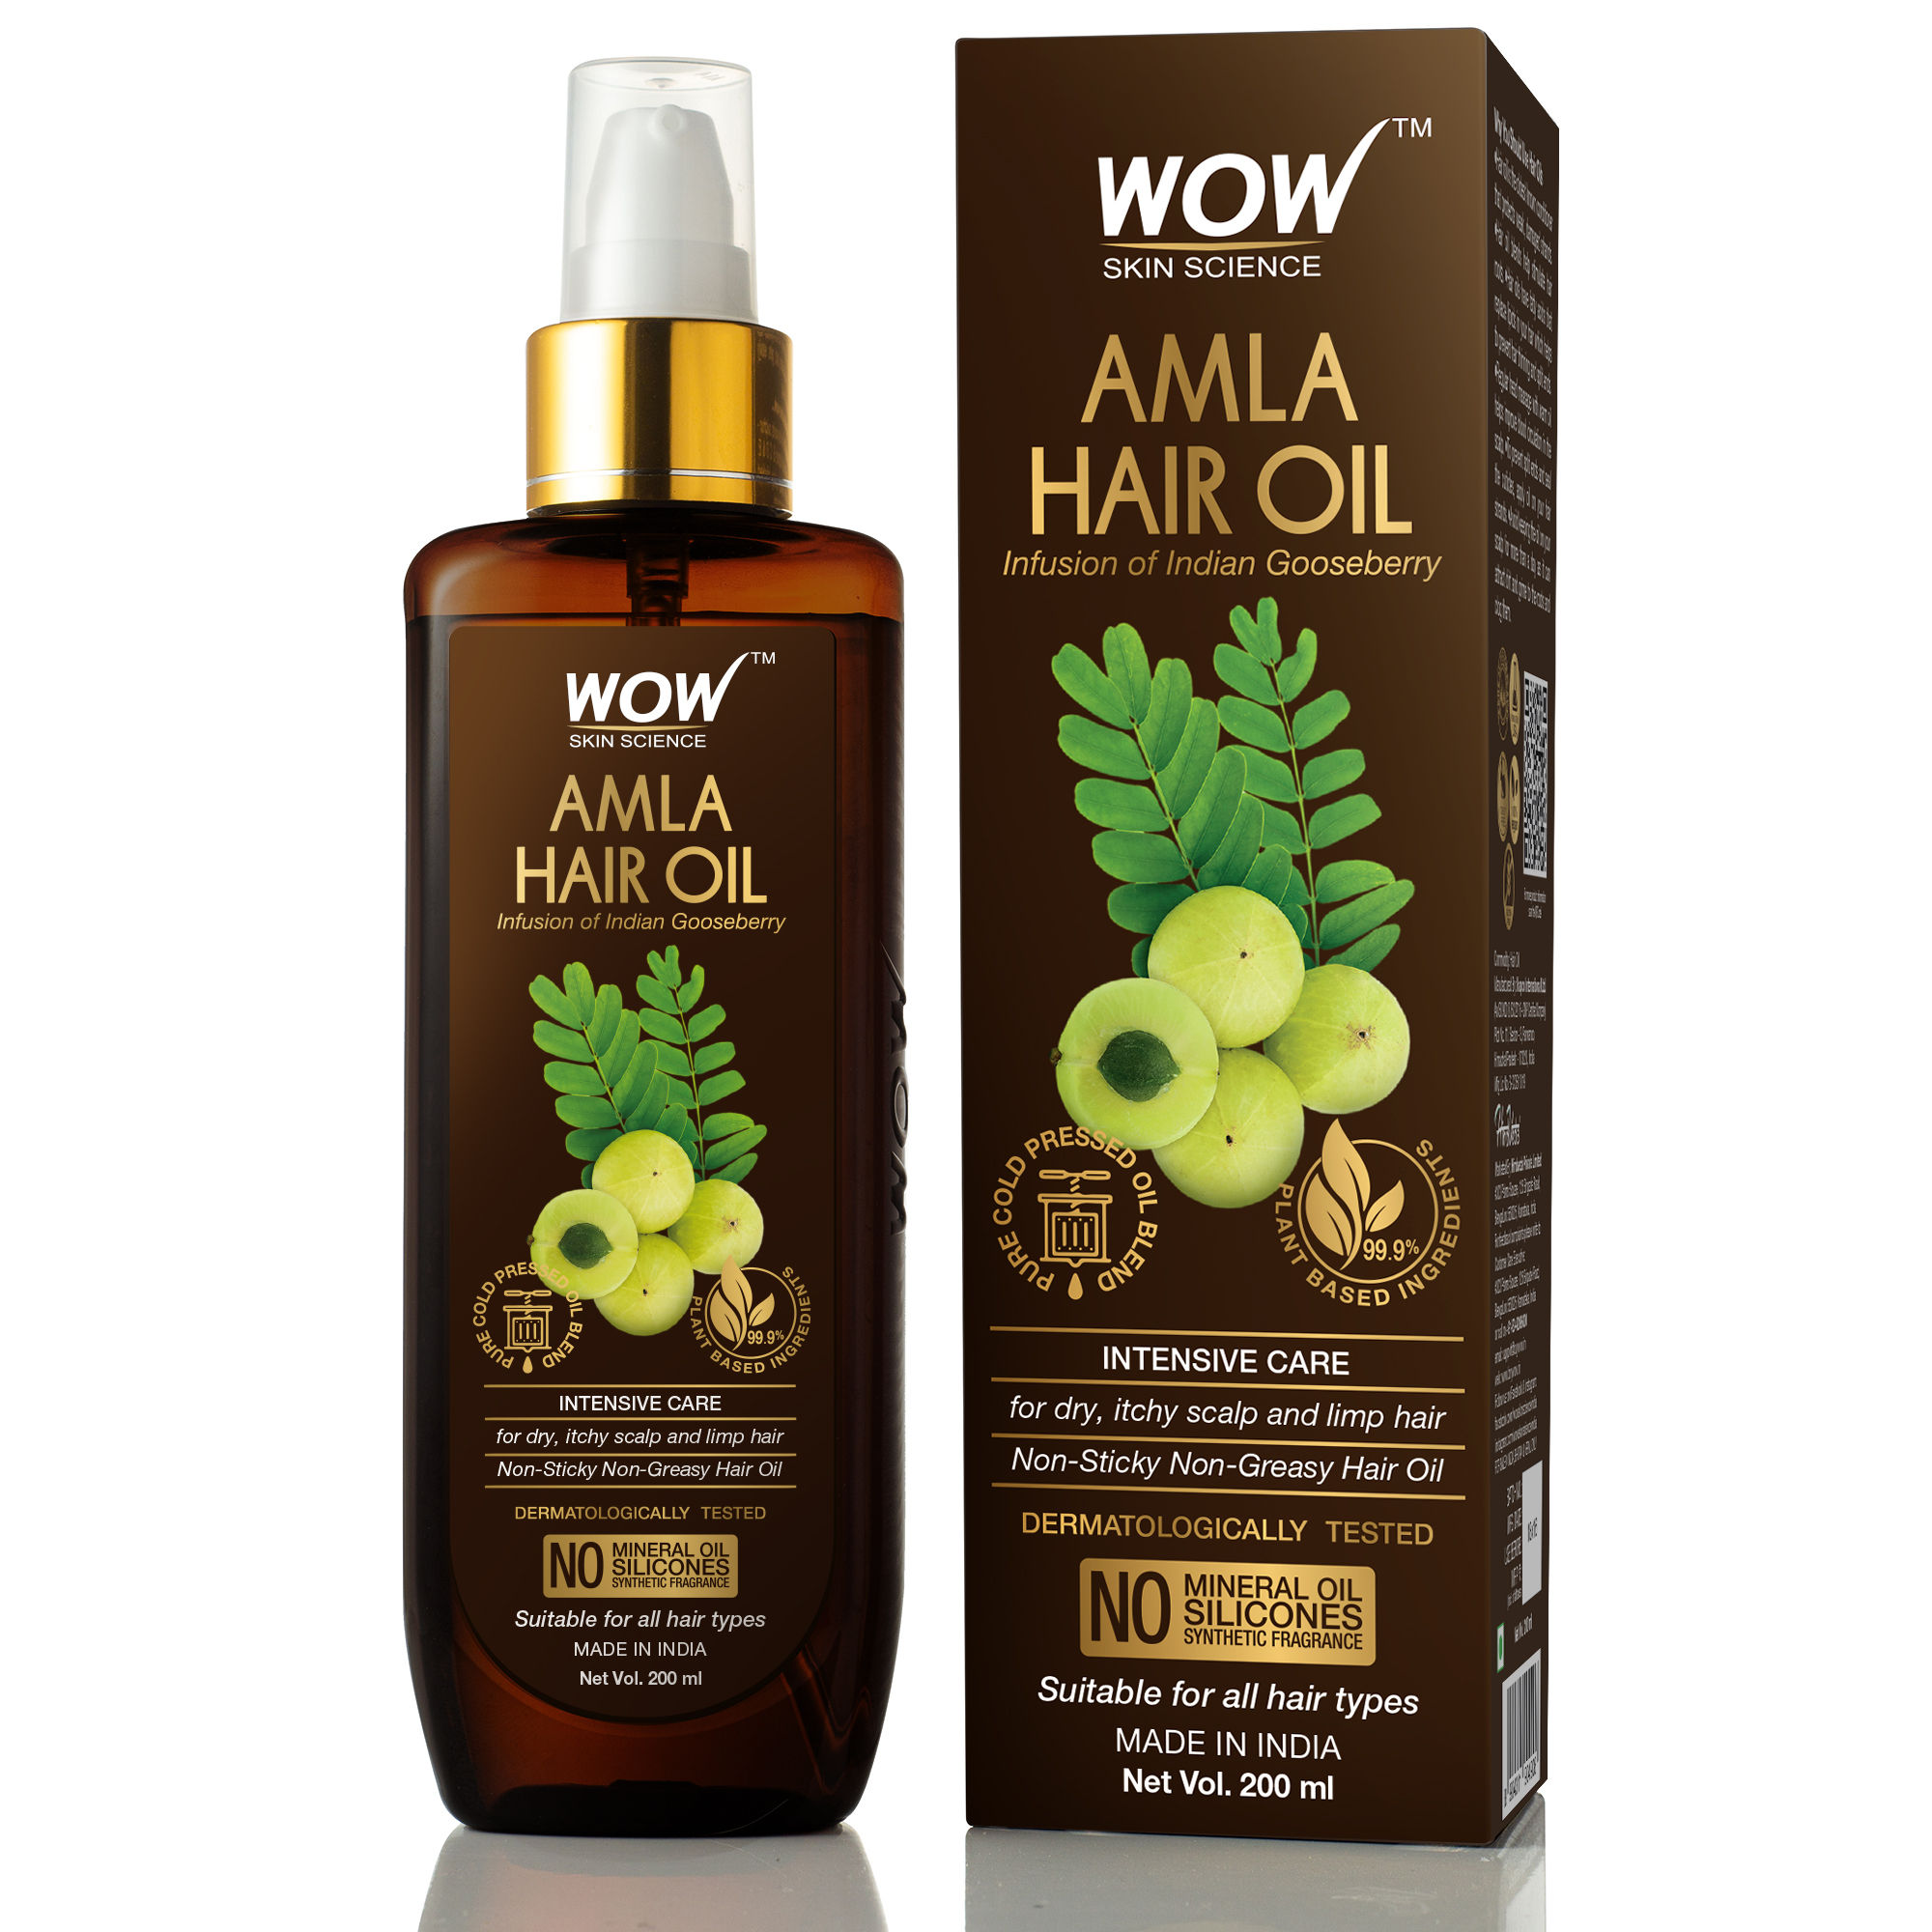 Wow Skin Science Amla Hair Oil